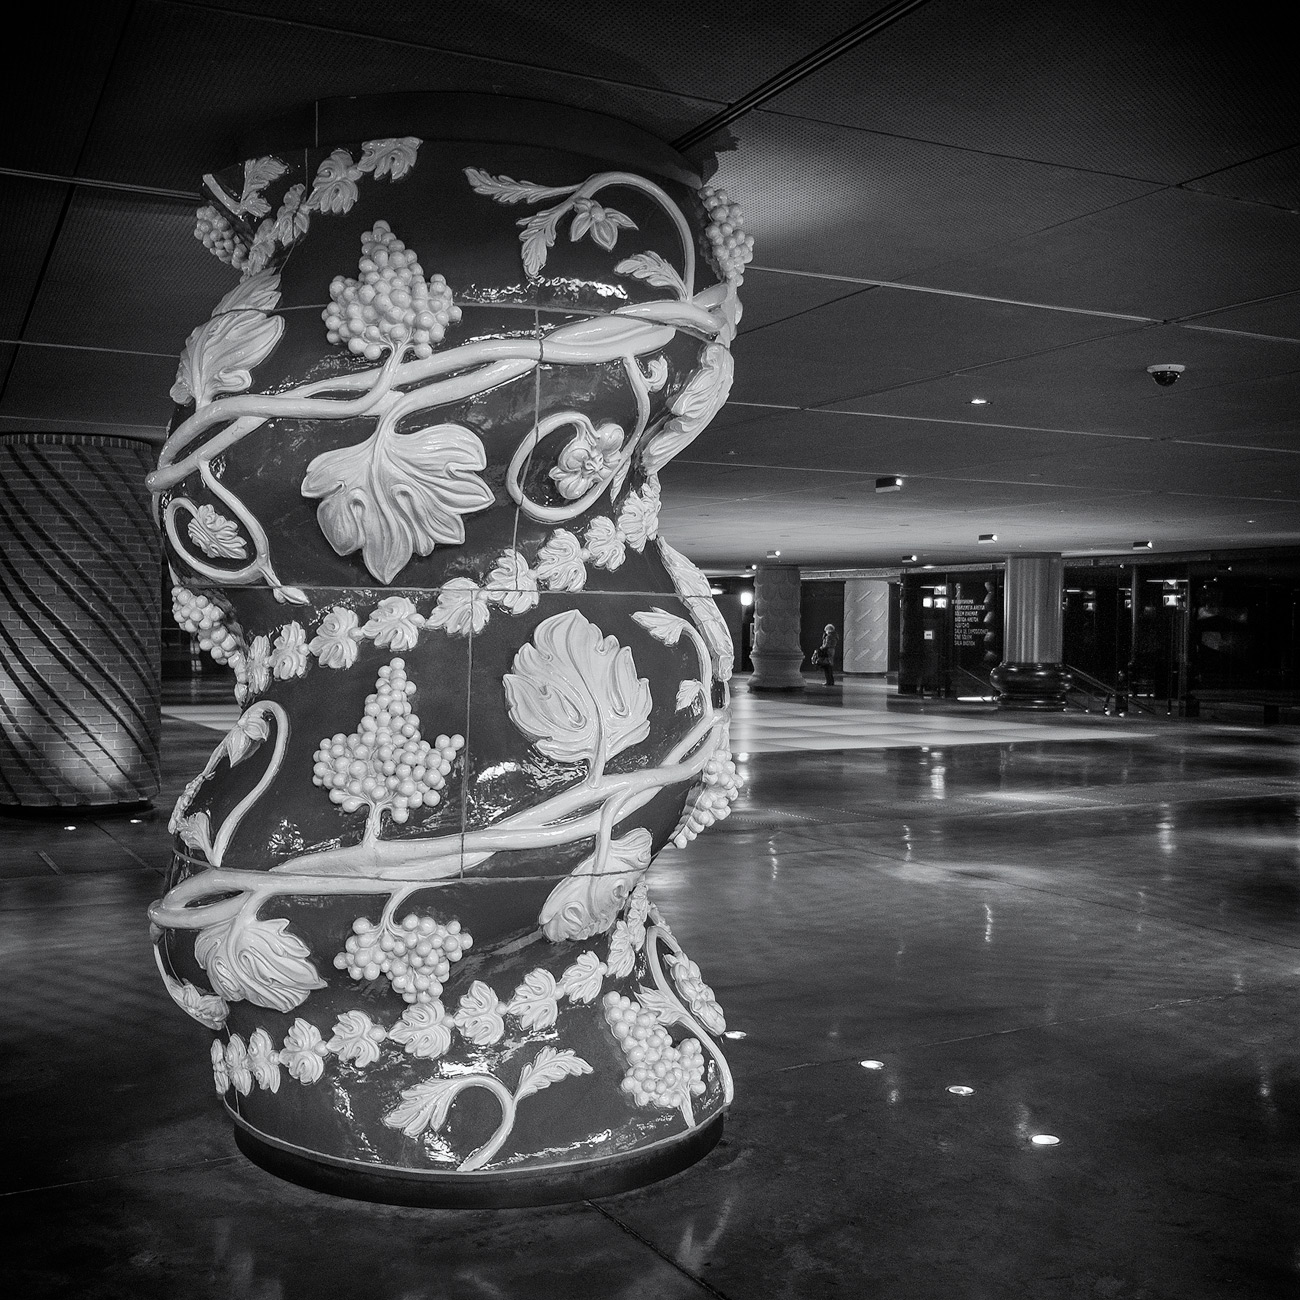 Ceramic pillar, Alhondiga - Fuji X-E1 @ 18mm